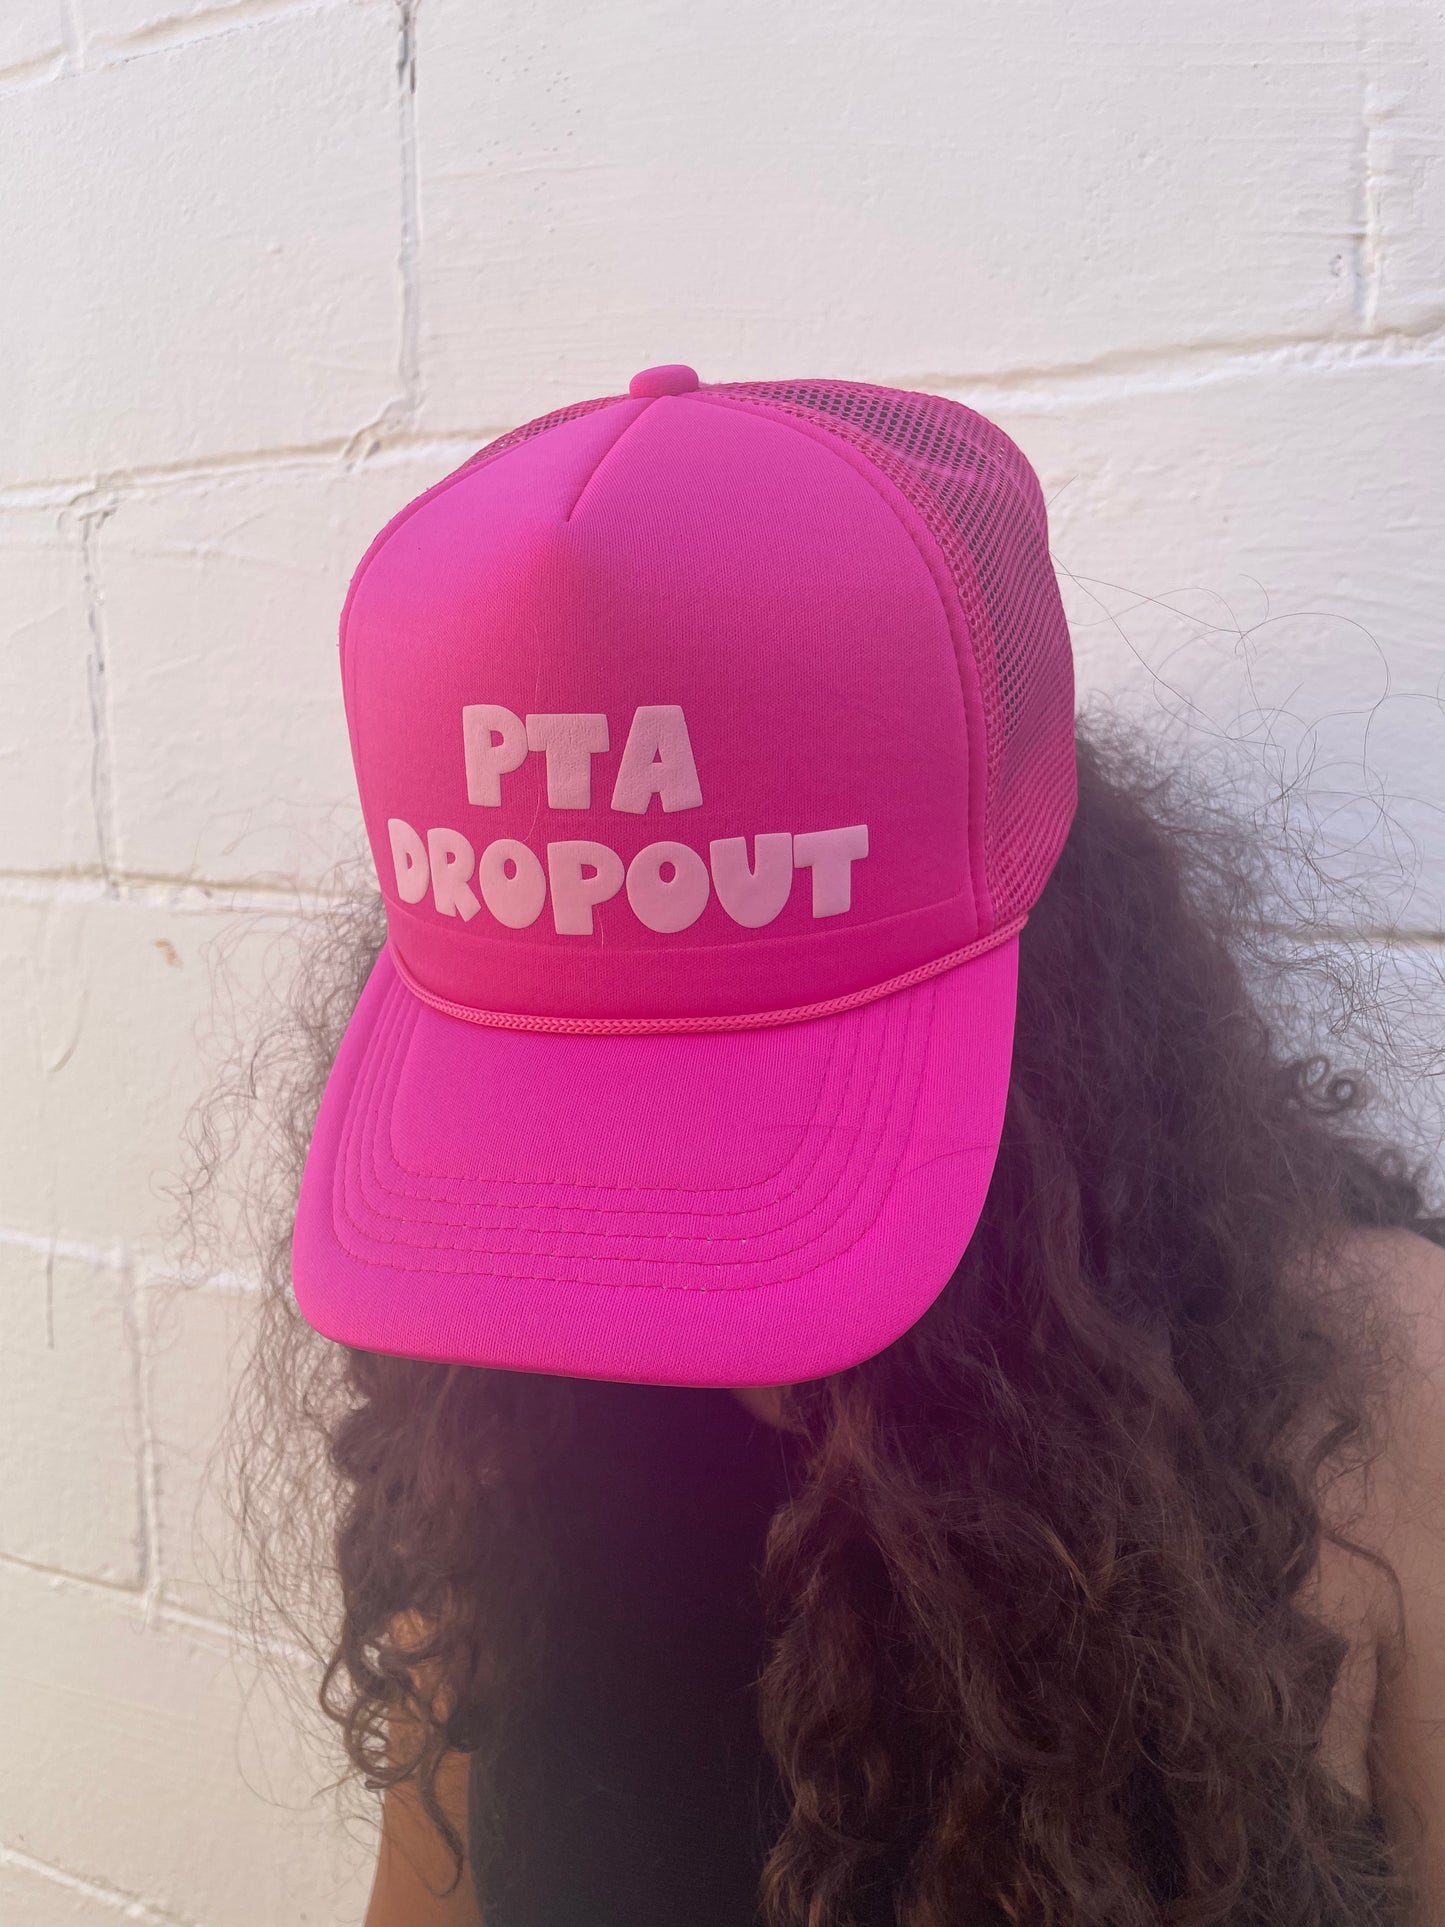 WOMENS PTA DROPOUT BALL CAP